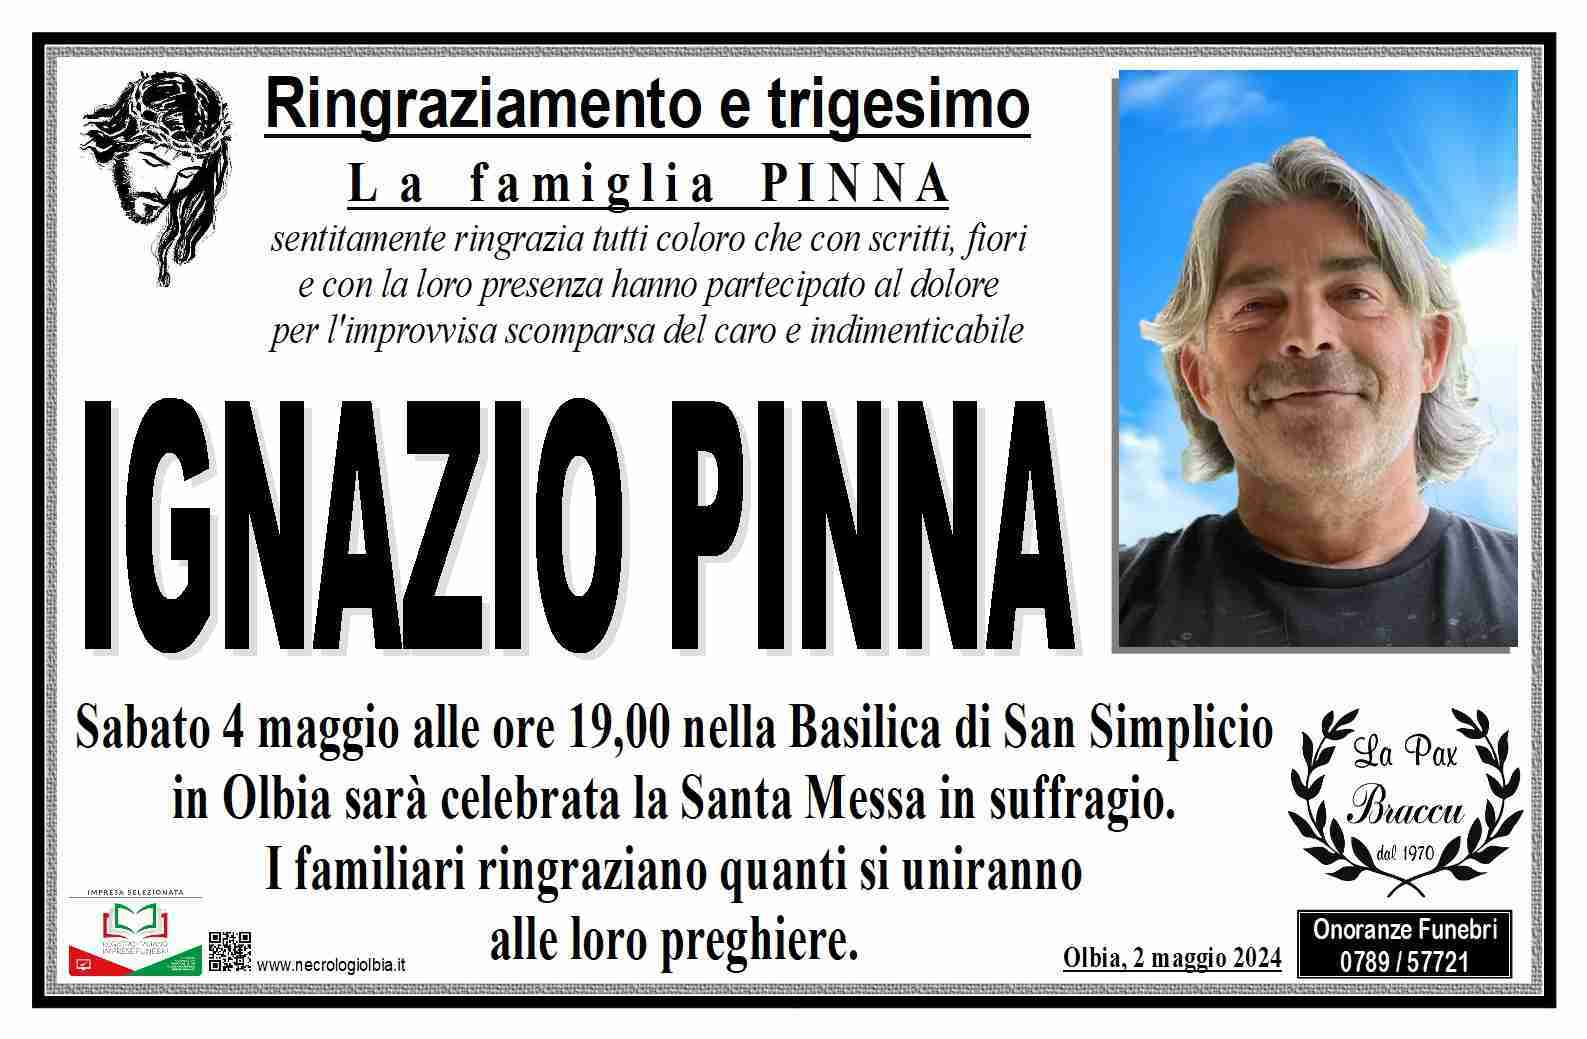 Ignazio Pinna